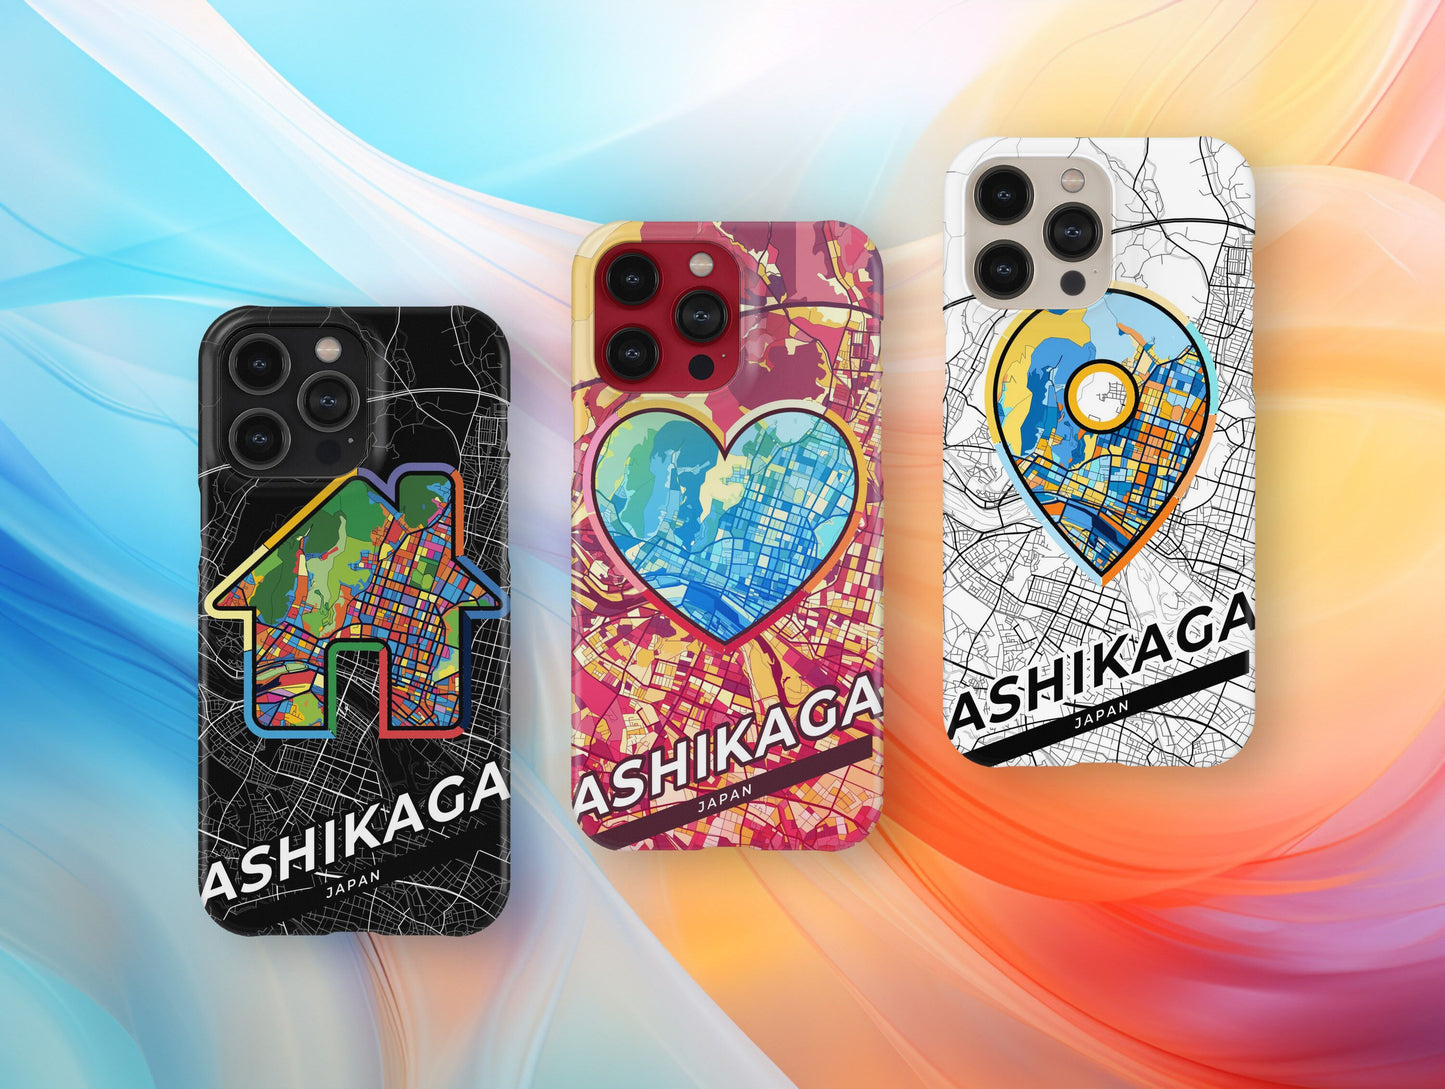 Ashikaga Japan slim phone case with colorful icon. Birthday, wedding or housewarming gift. Couple match cases.